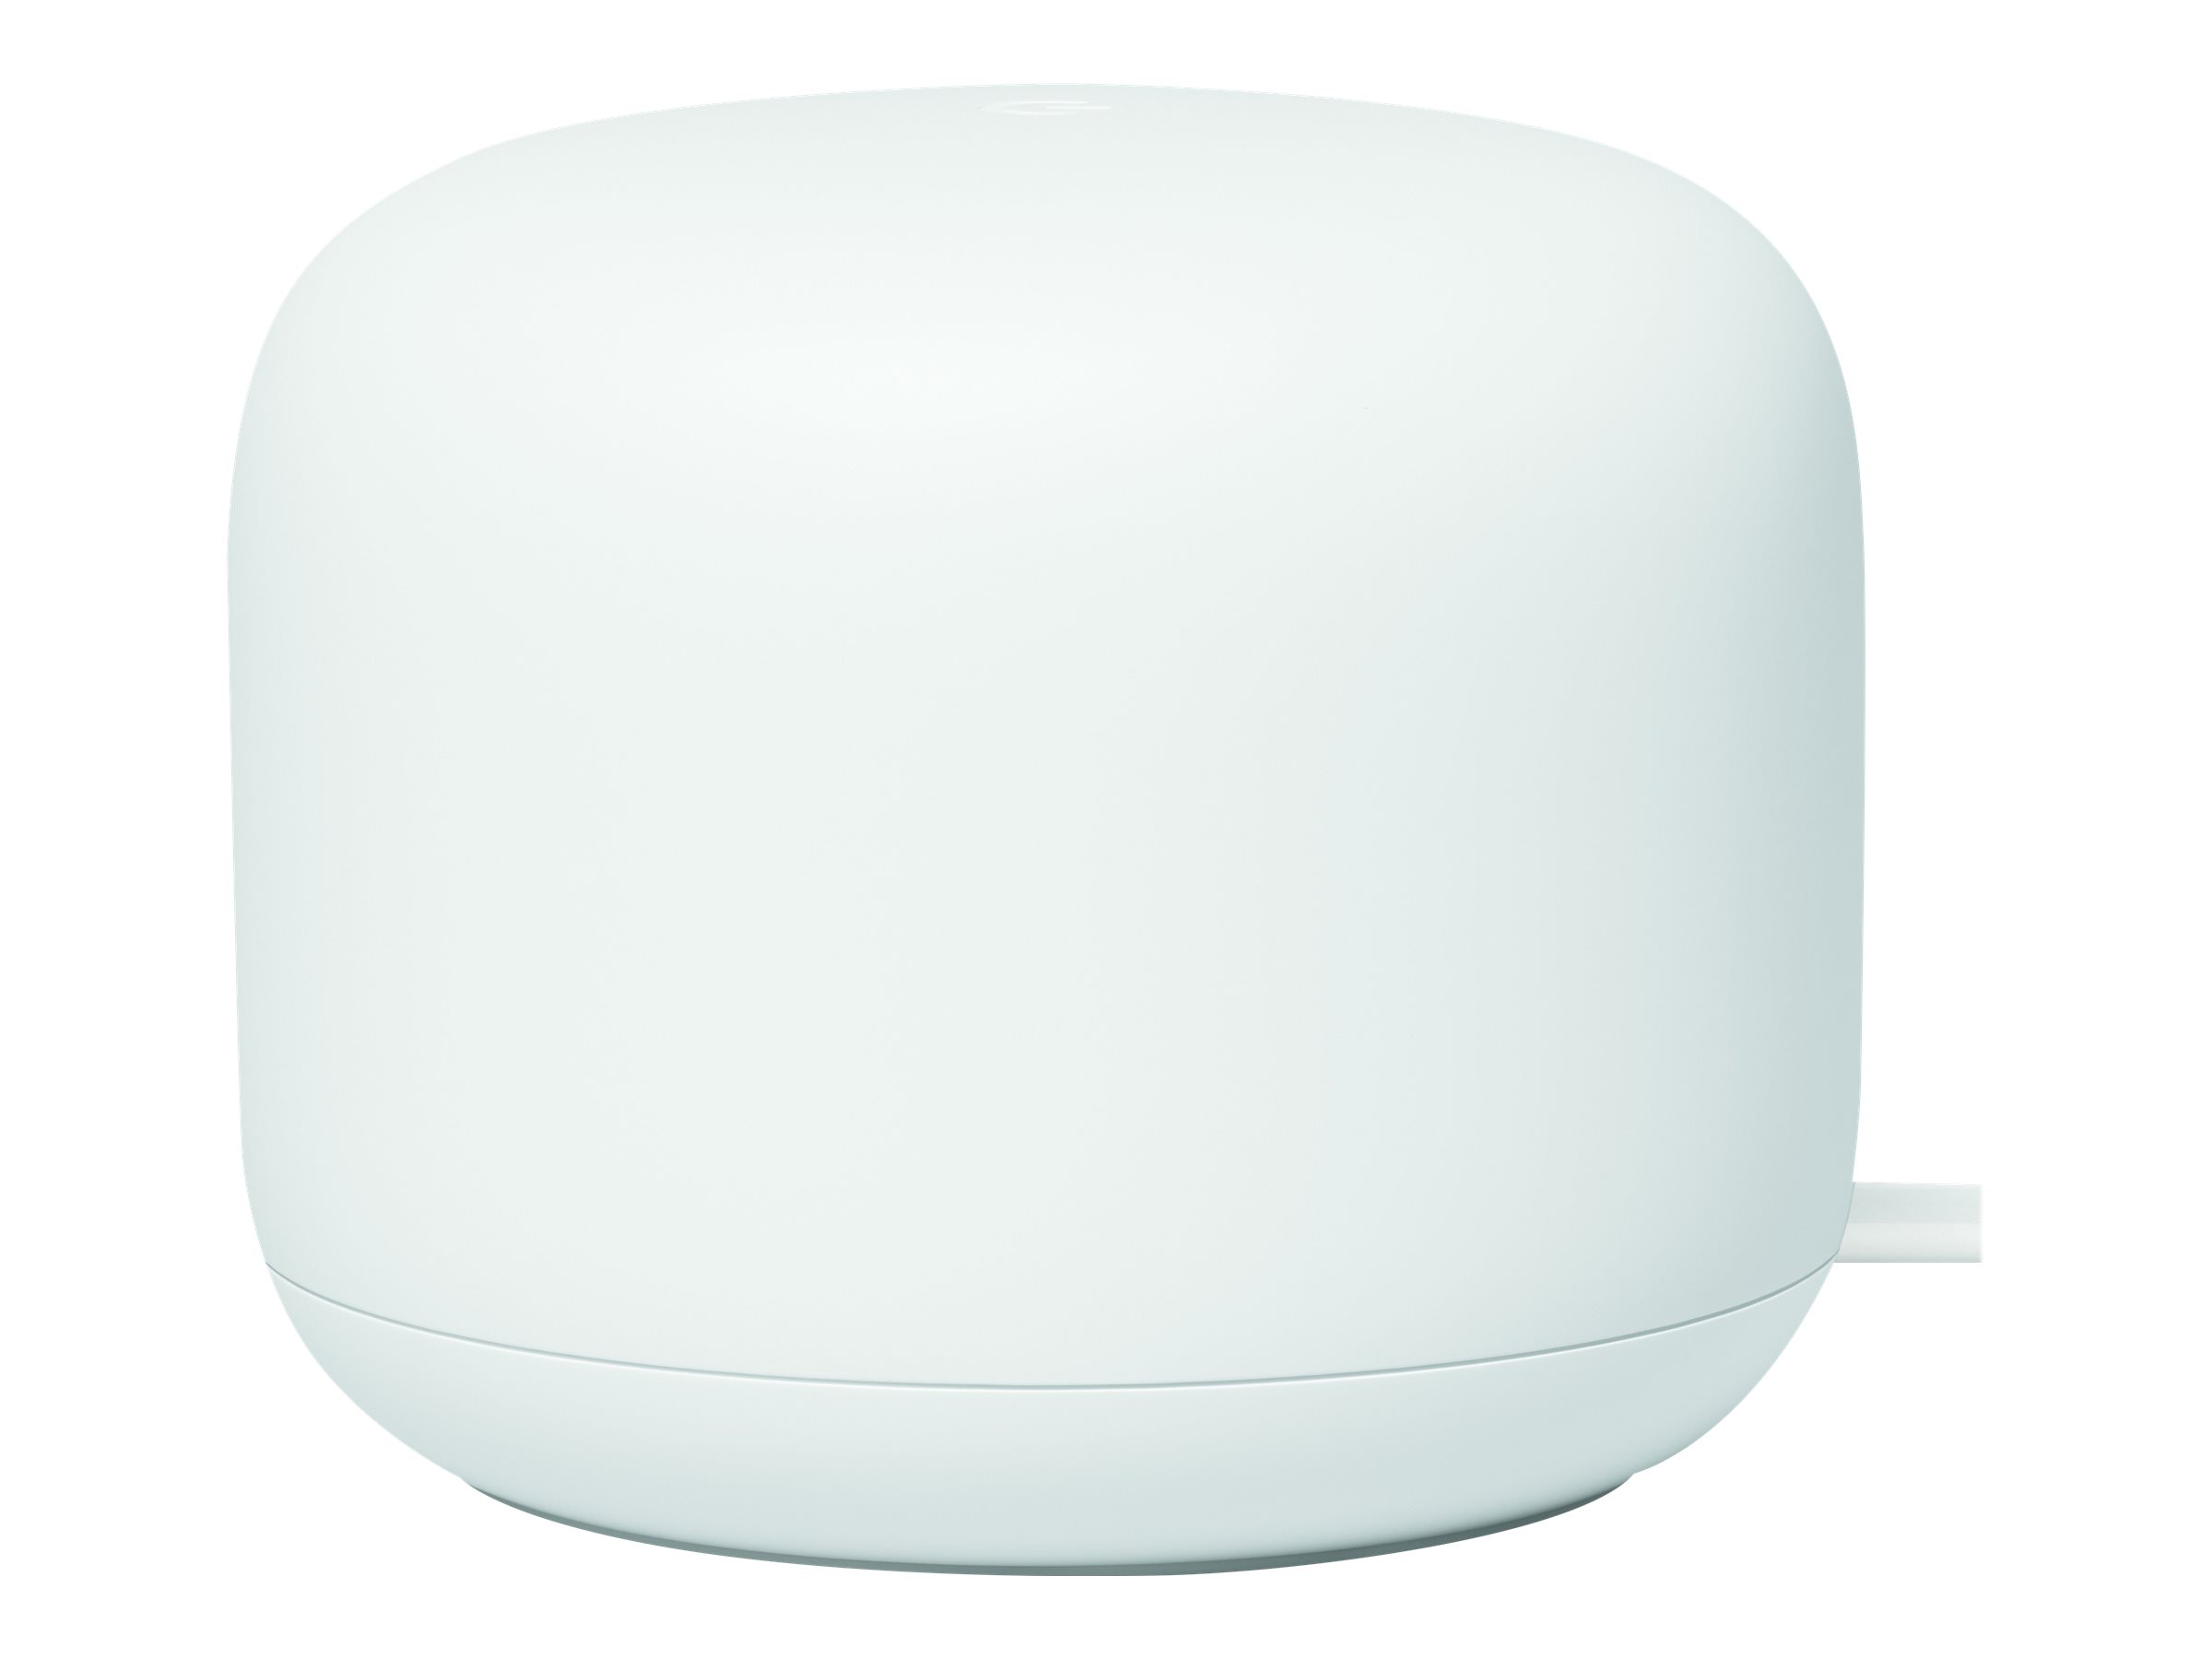 Google Nest Wifi - WLAN-System (Router, Extender)